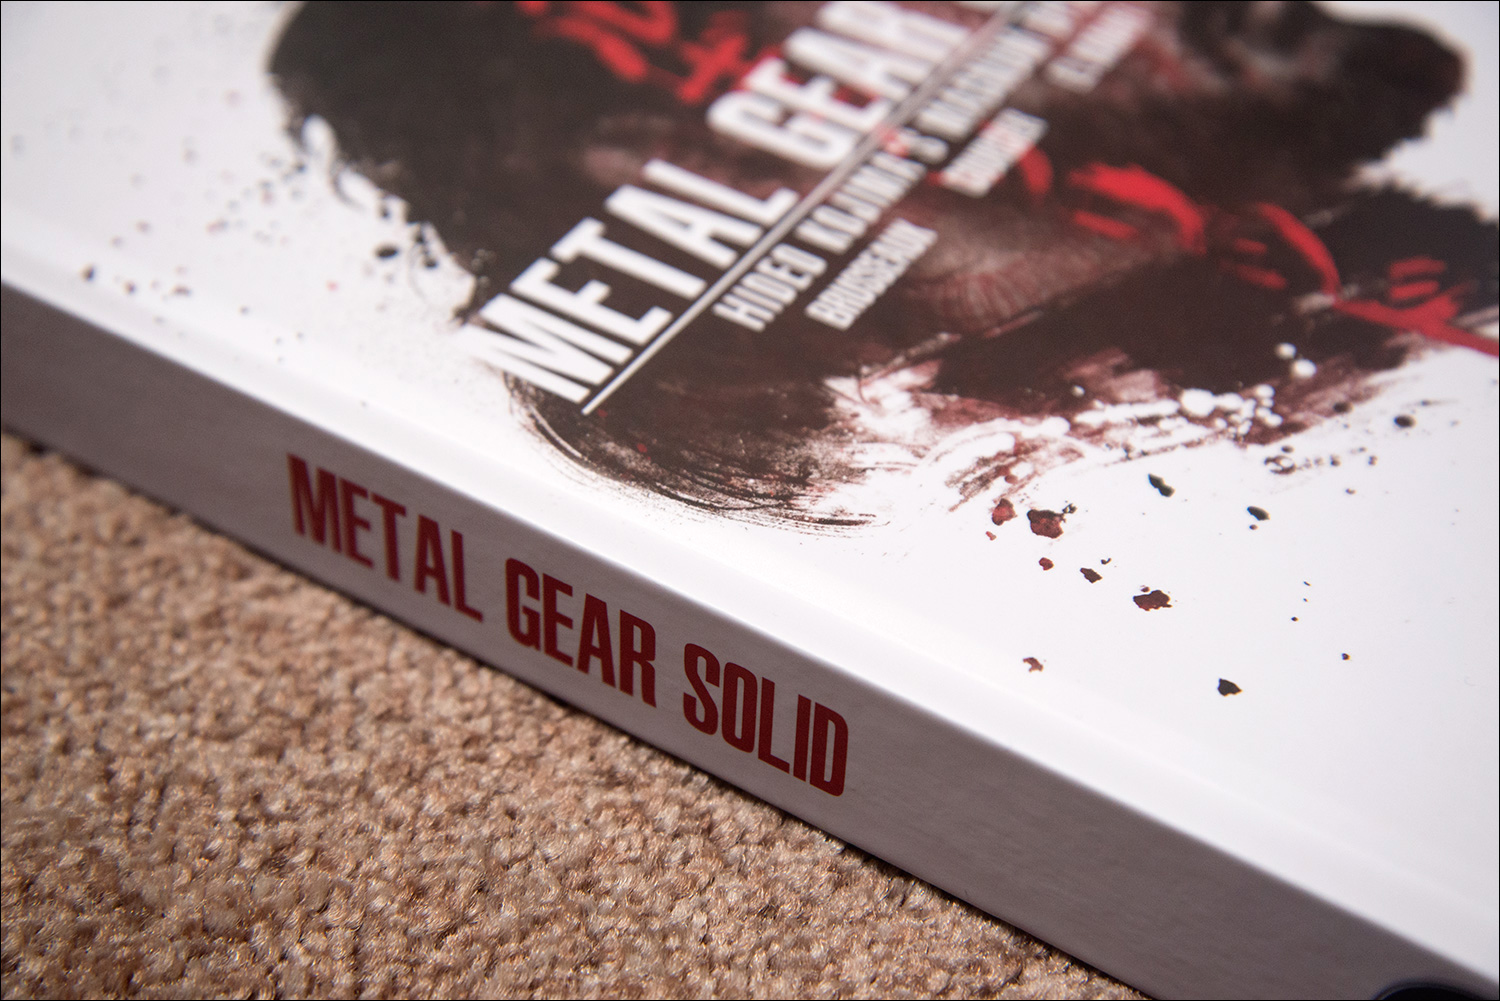 Metal Gear Solid. Hideo Kojima's Magnum Opus - Third Editions